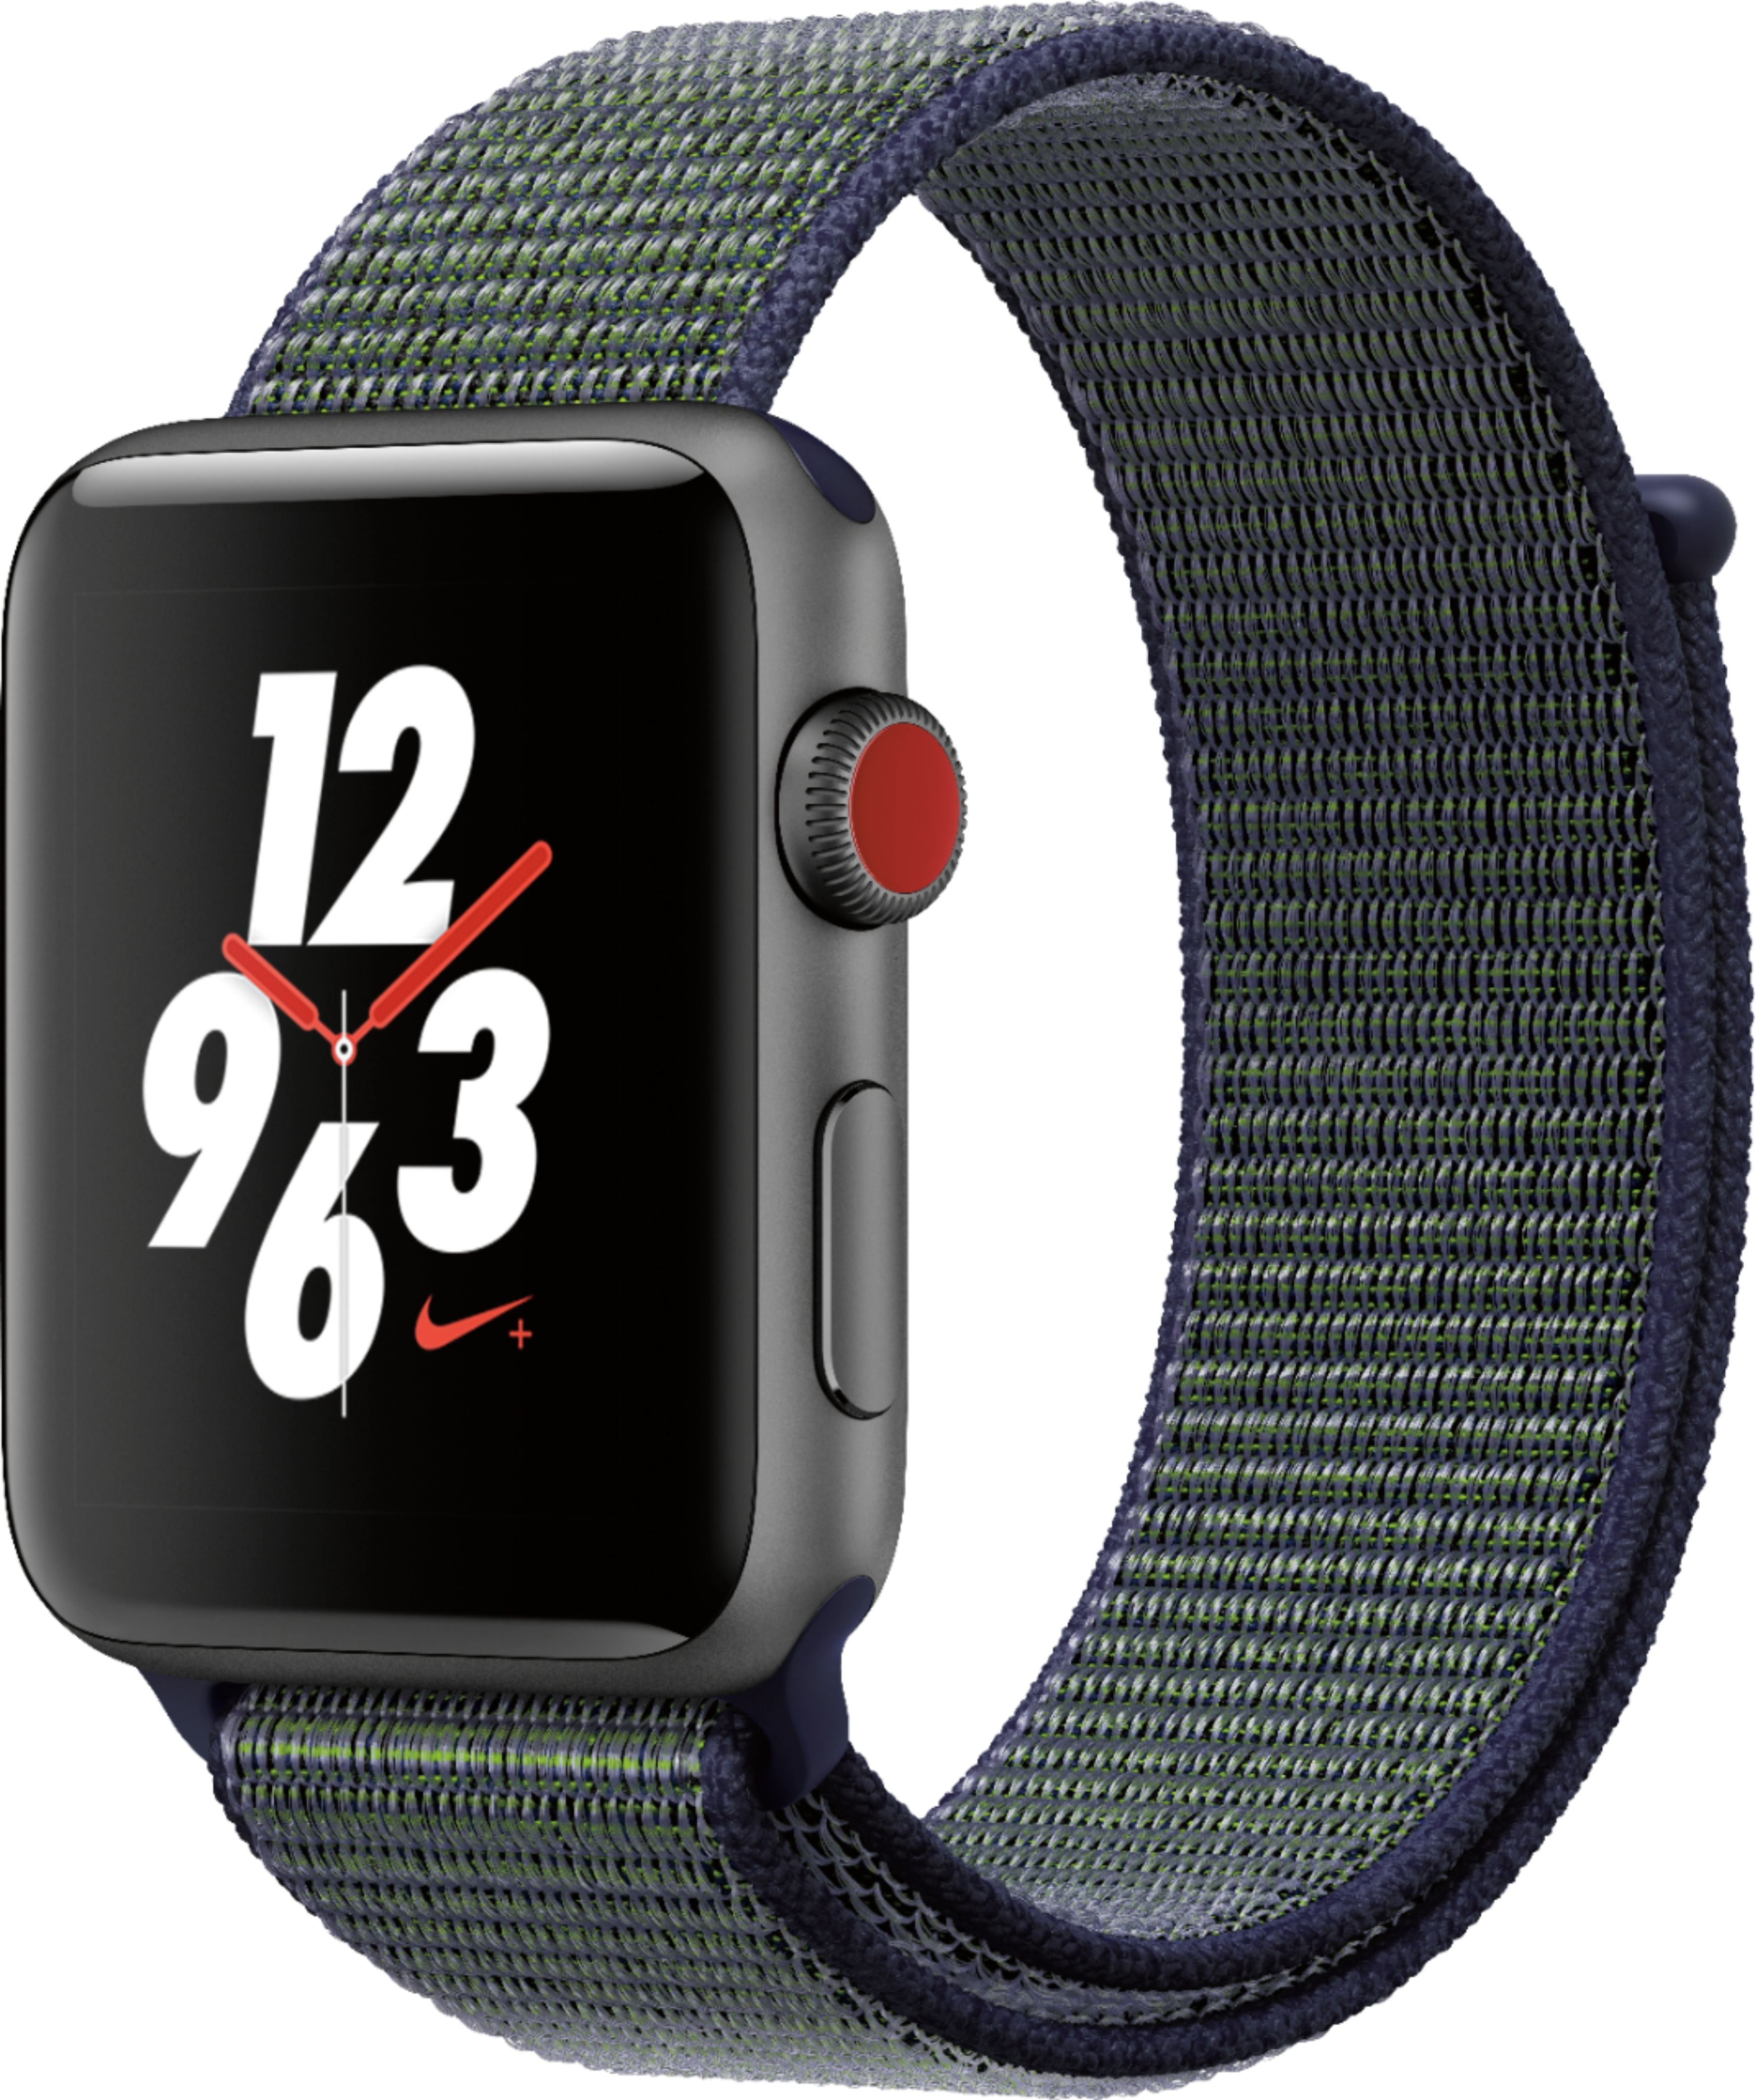 Apple Watch Nike Series 3 42mm Space Gray Aluminum Case/ Midnight Fog